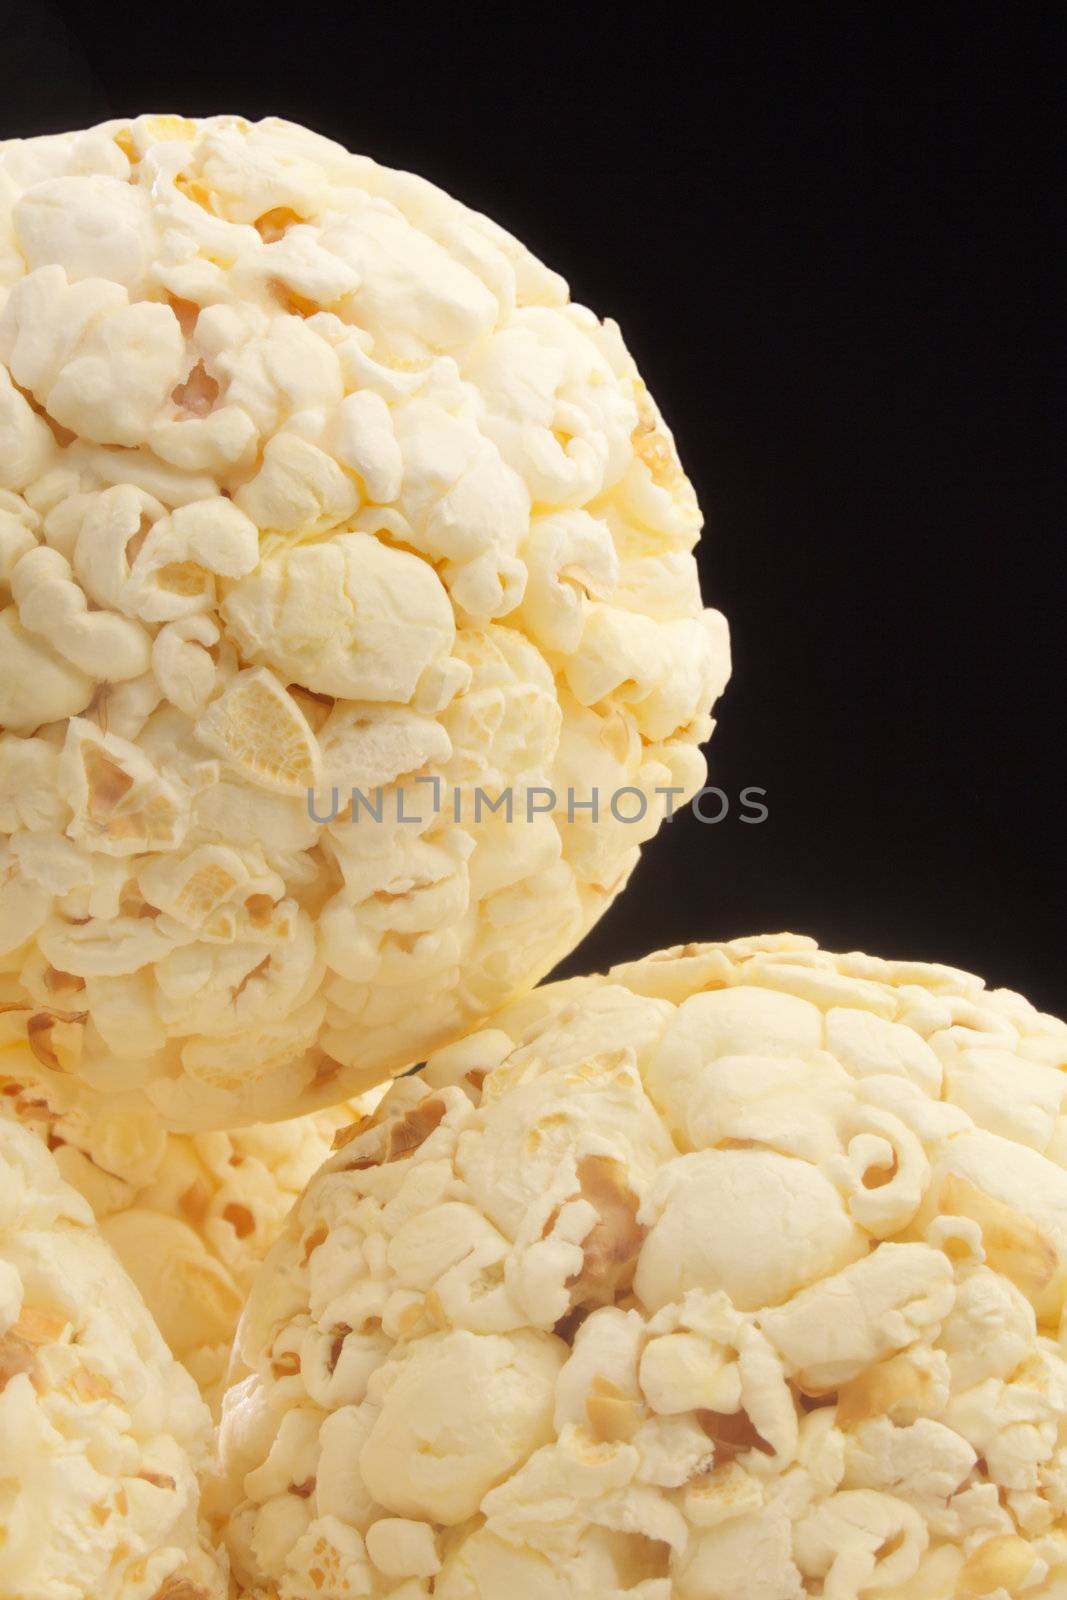 Popcorn Balls by carterphoto